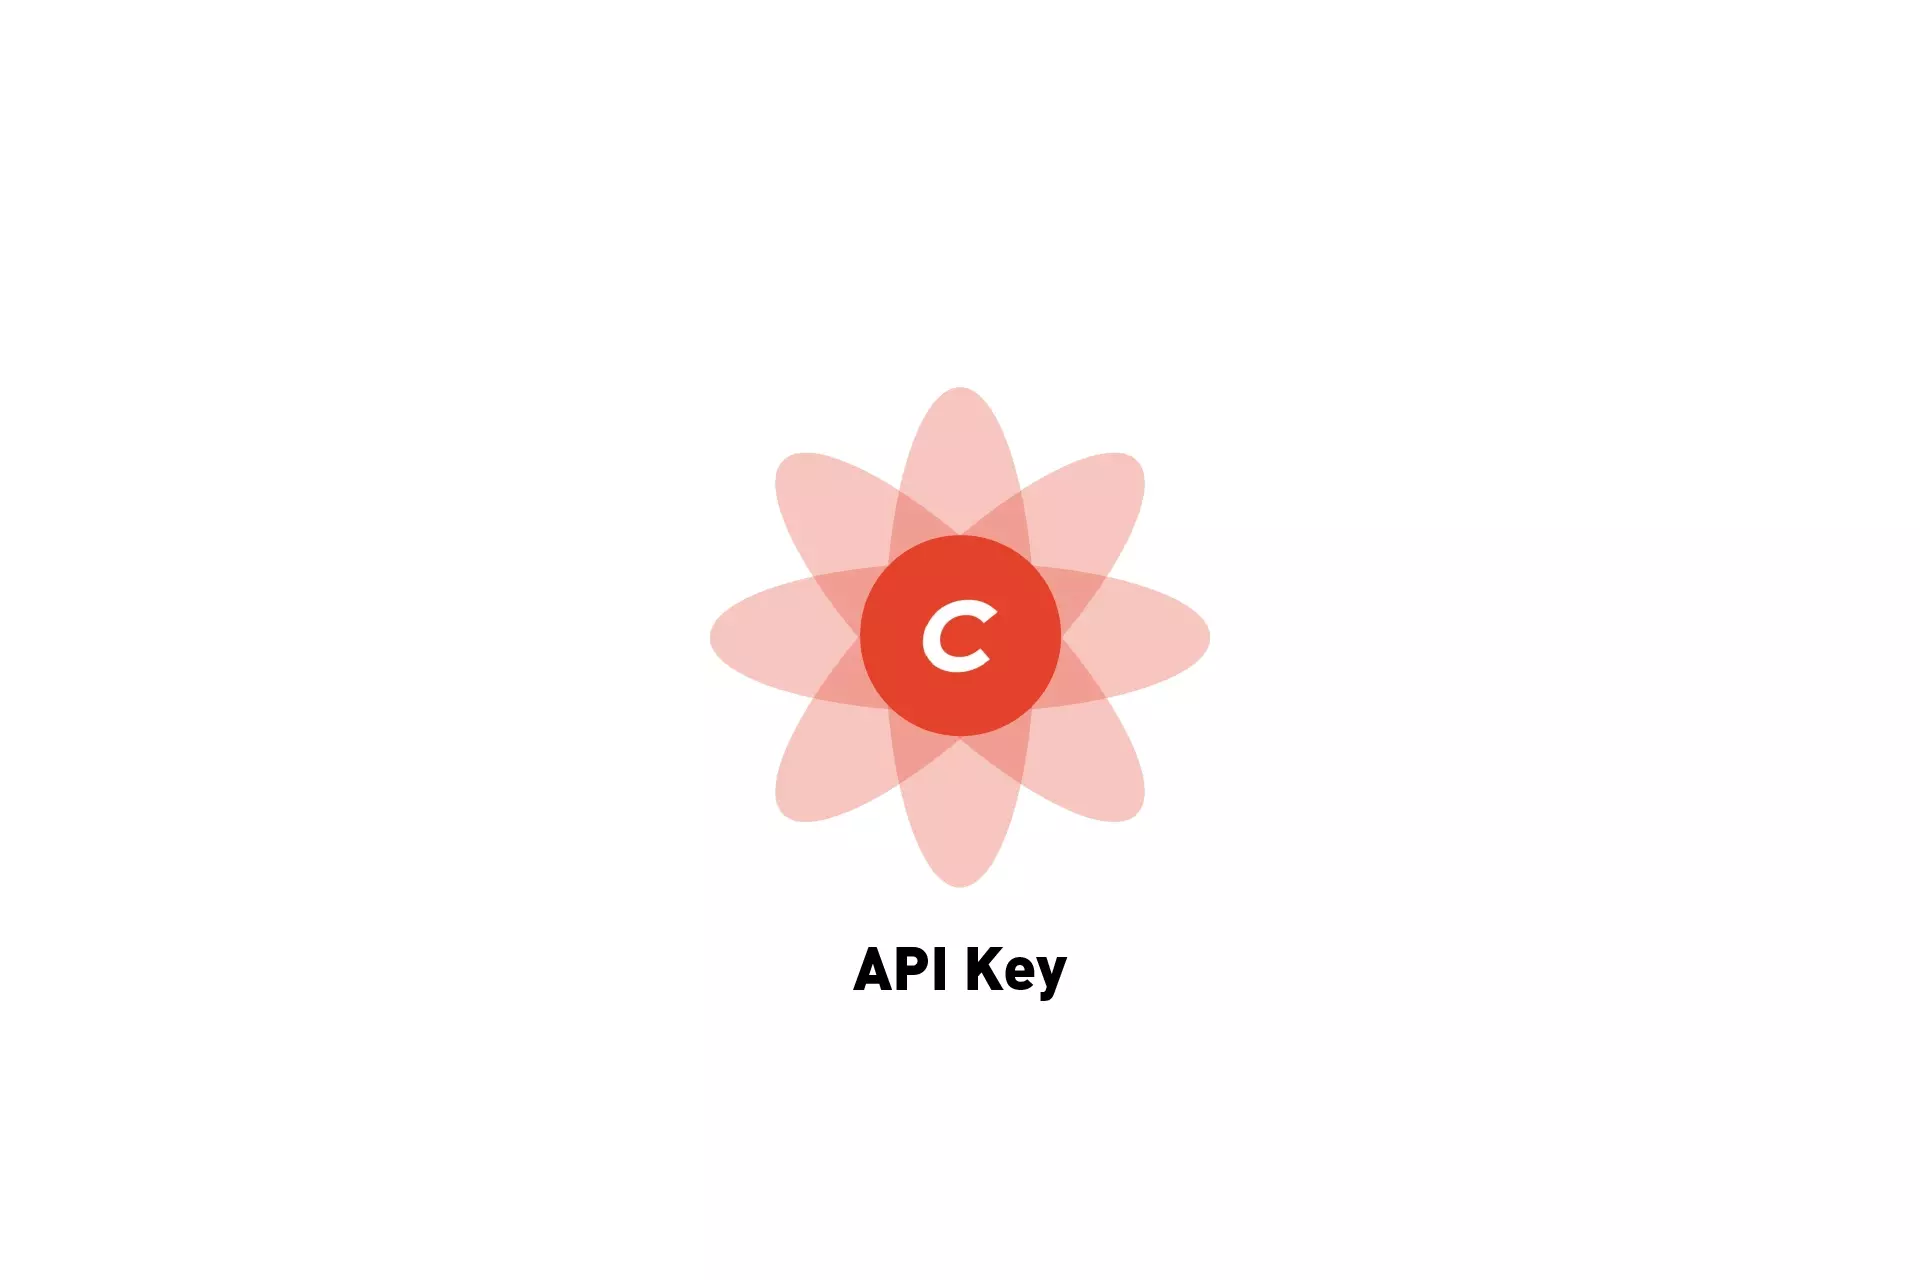 A flower that represents Craft CMS. Beneath it sits the text "API Key."